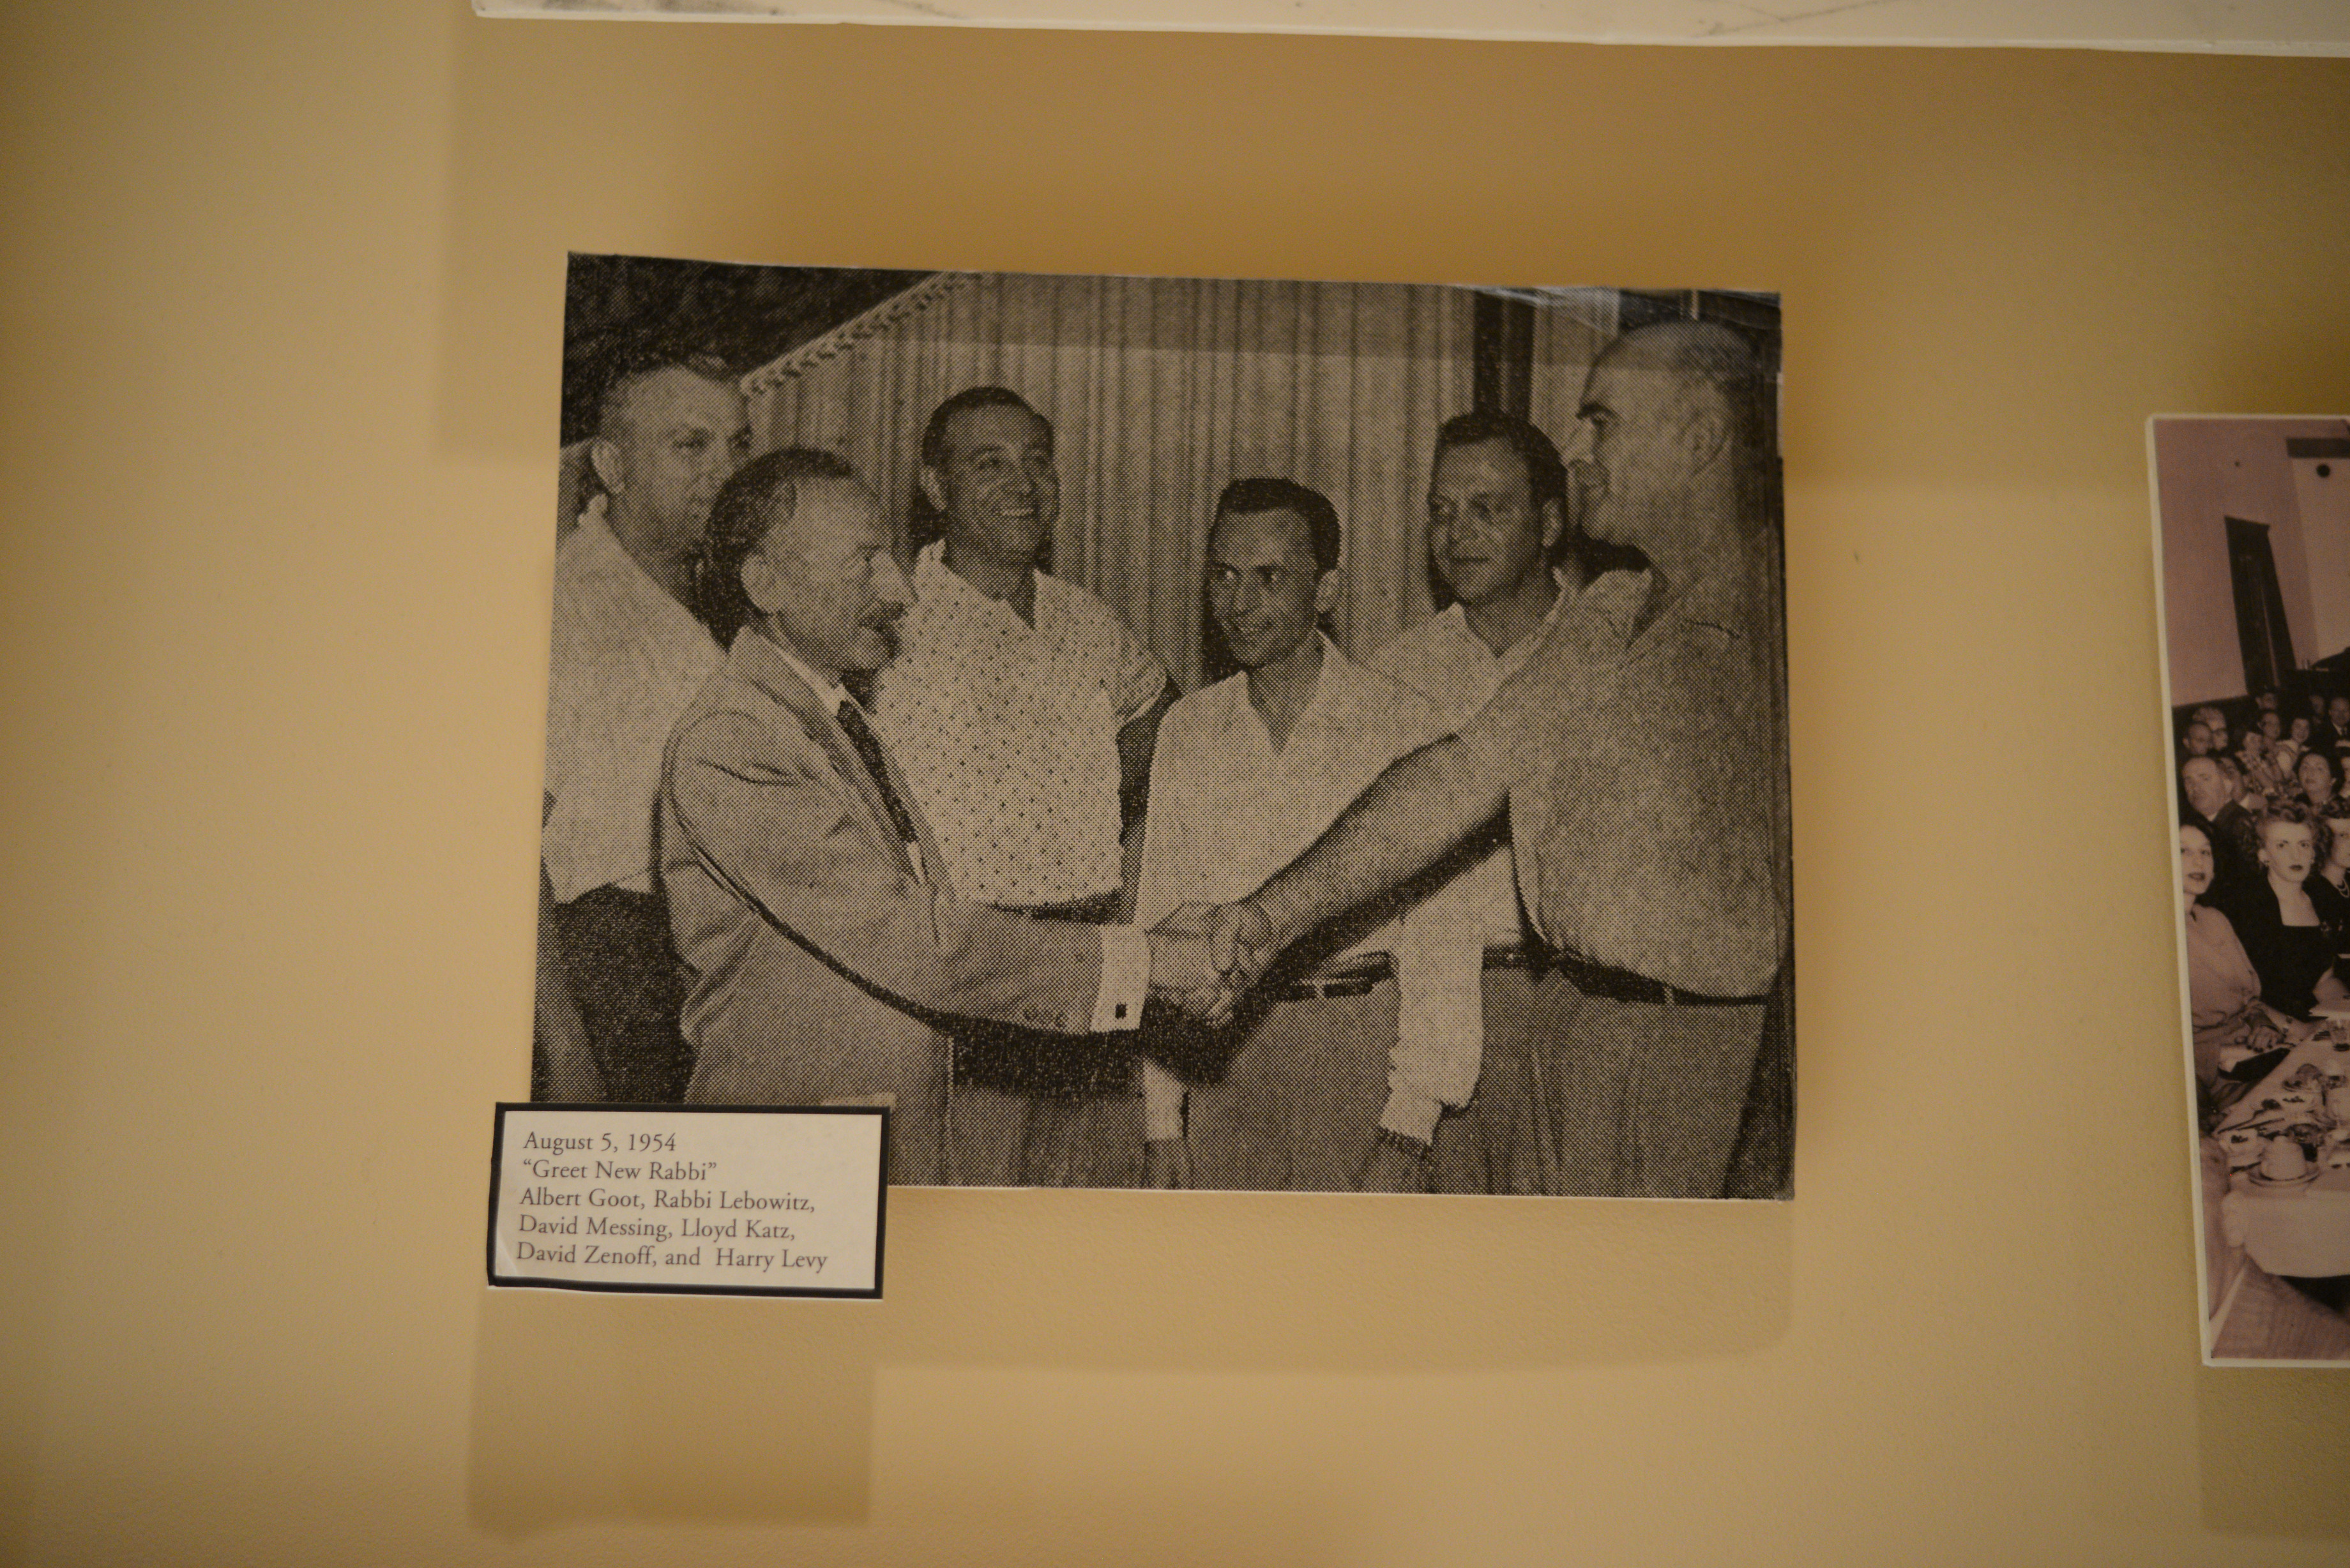 Photograph of Albert Goot, Rabbi Lebowitz, David Messing, Lloyd Katz, David Zenoff and Harry Levy, August 5, 1954